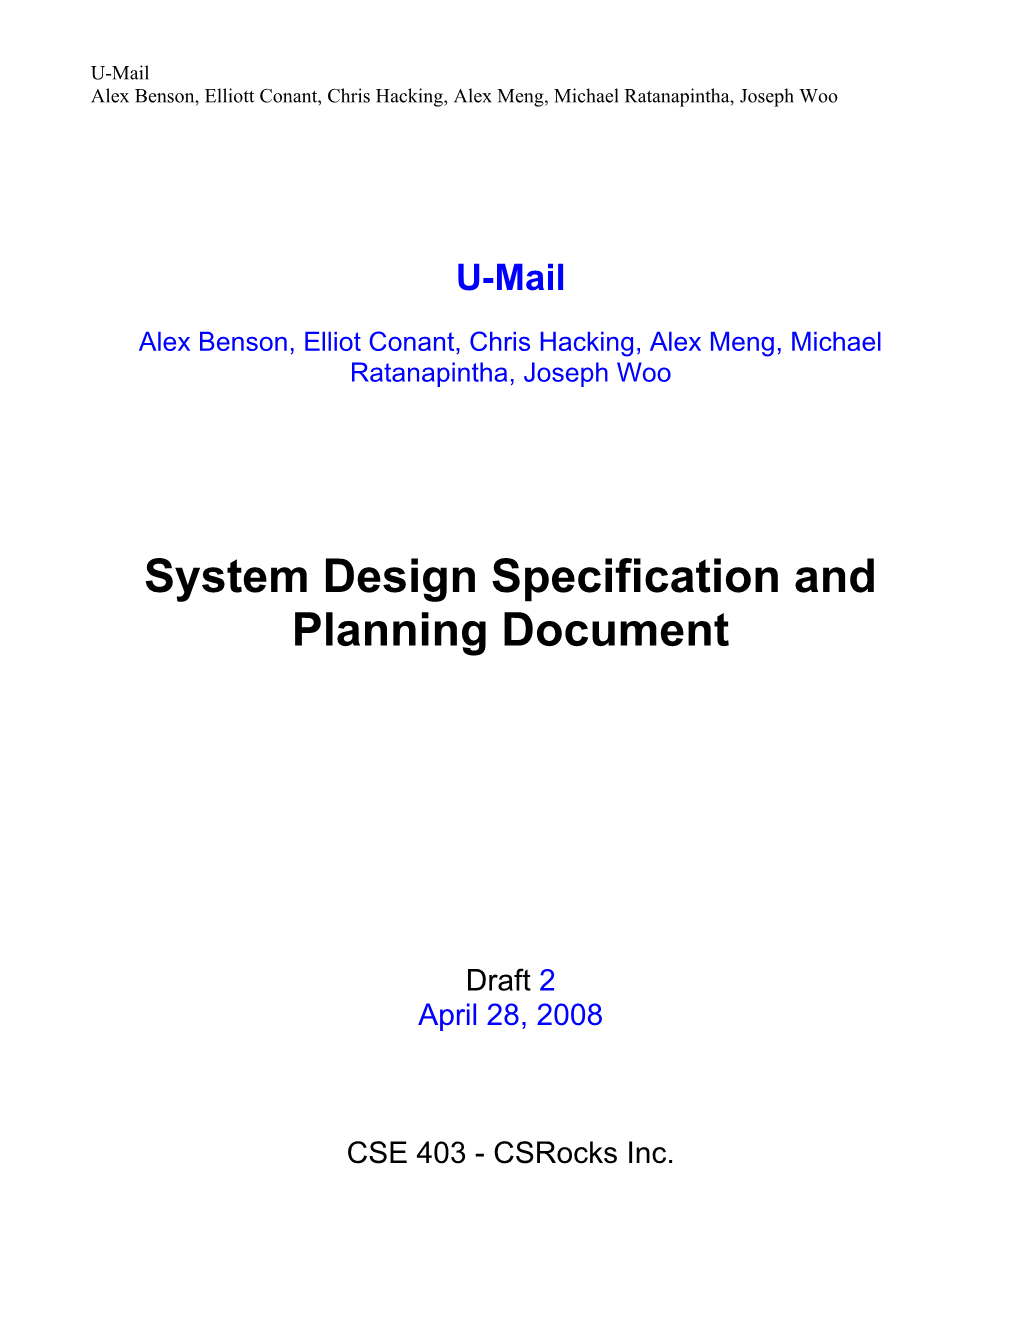 U-Mail System Design Specification